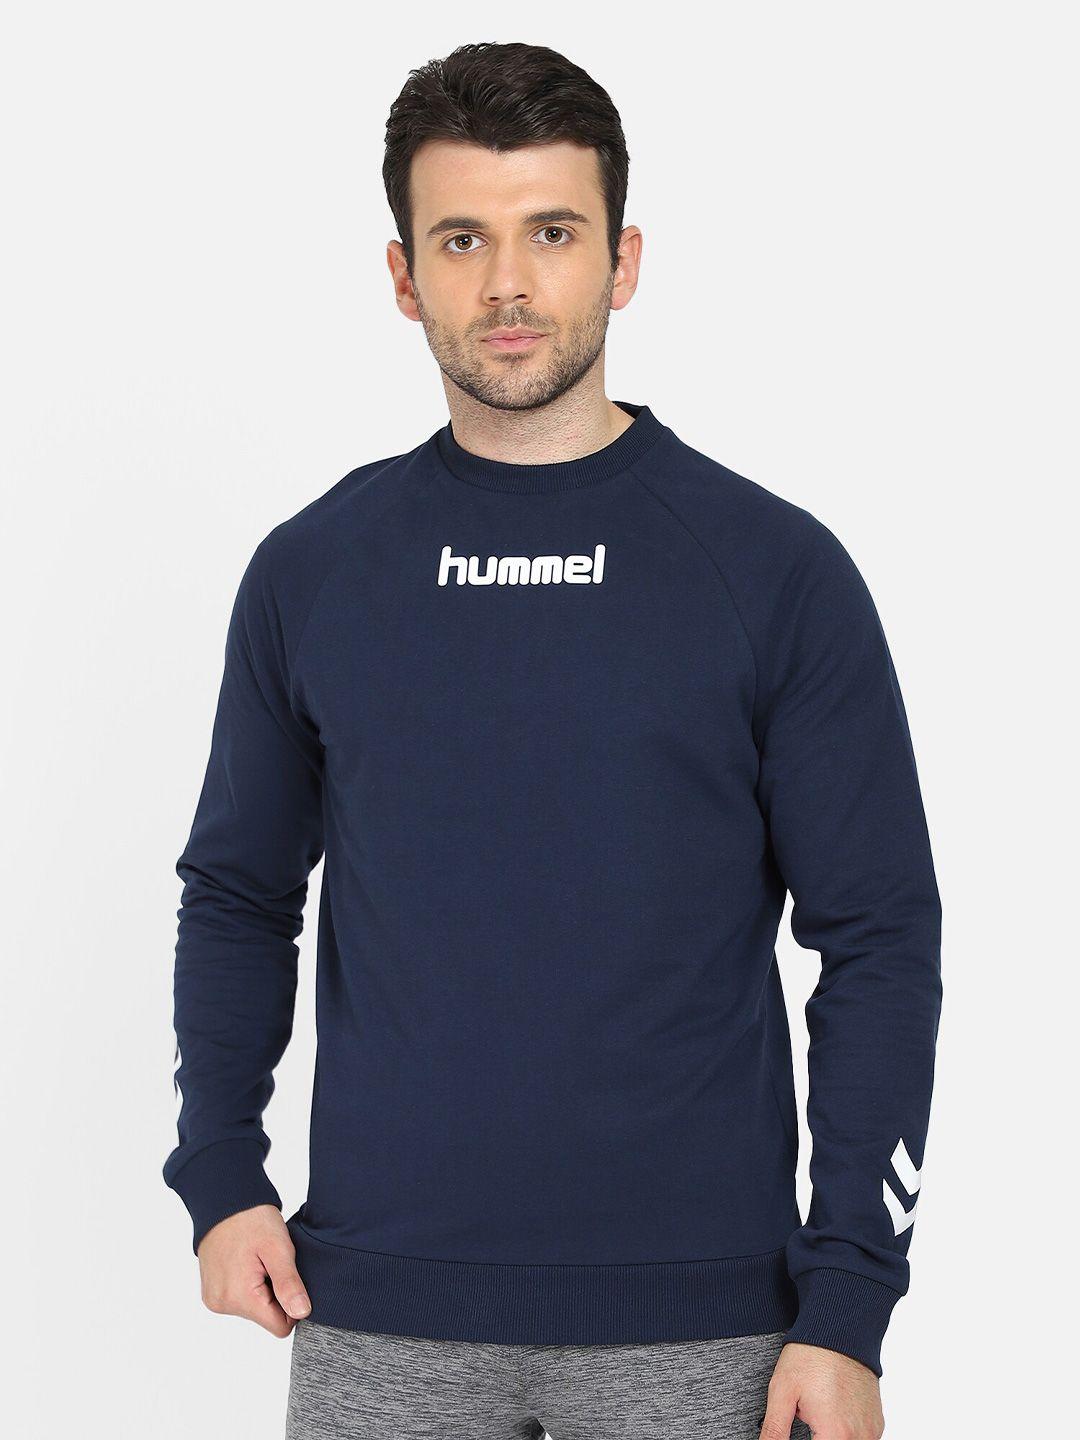 hummel men navy blue printed pullover sweatshirt